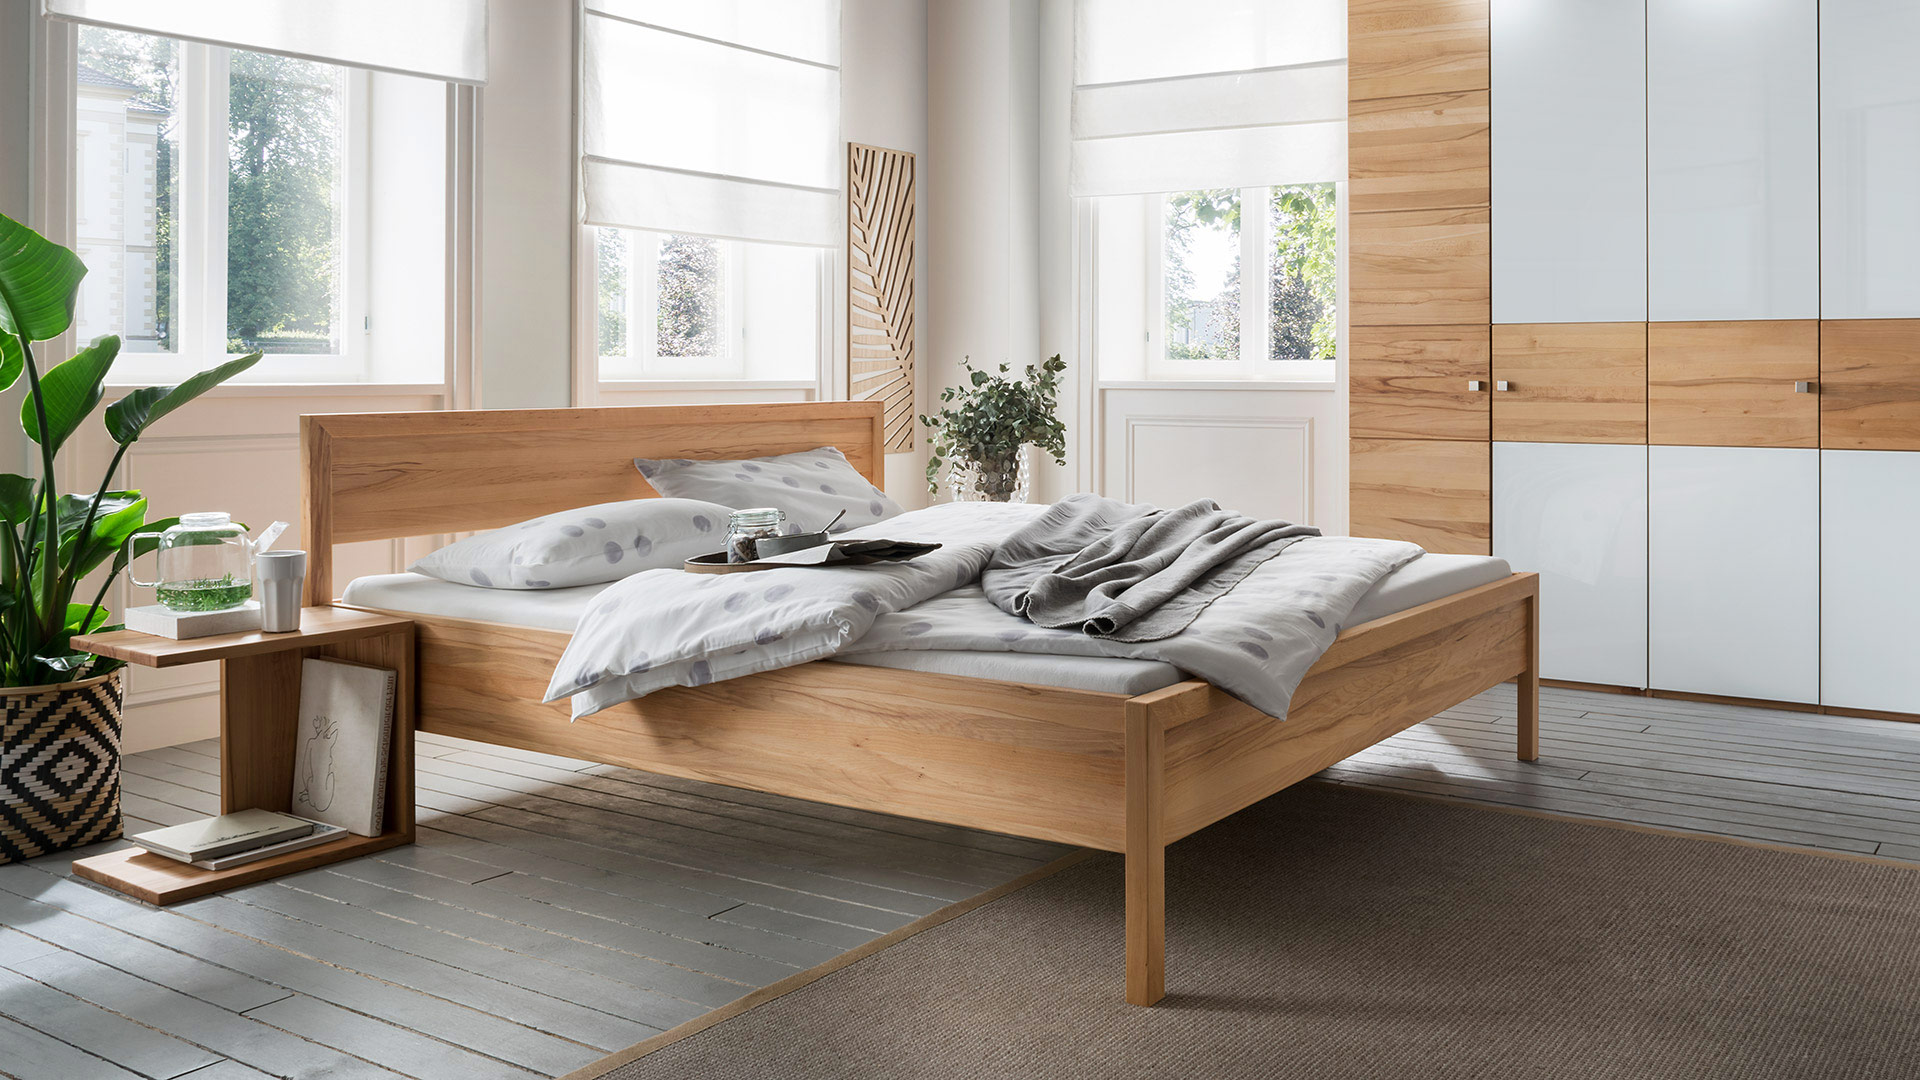 Smeren verpleegster Conflict Massief houten bed "Silia" | allnatura Nederland